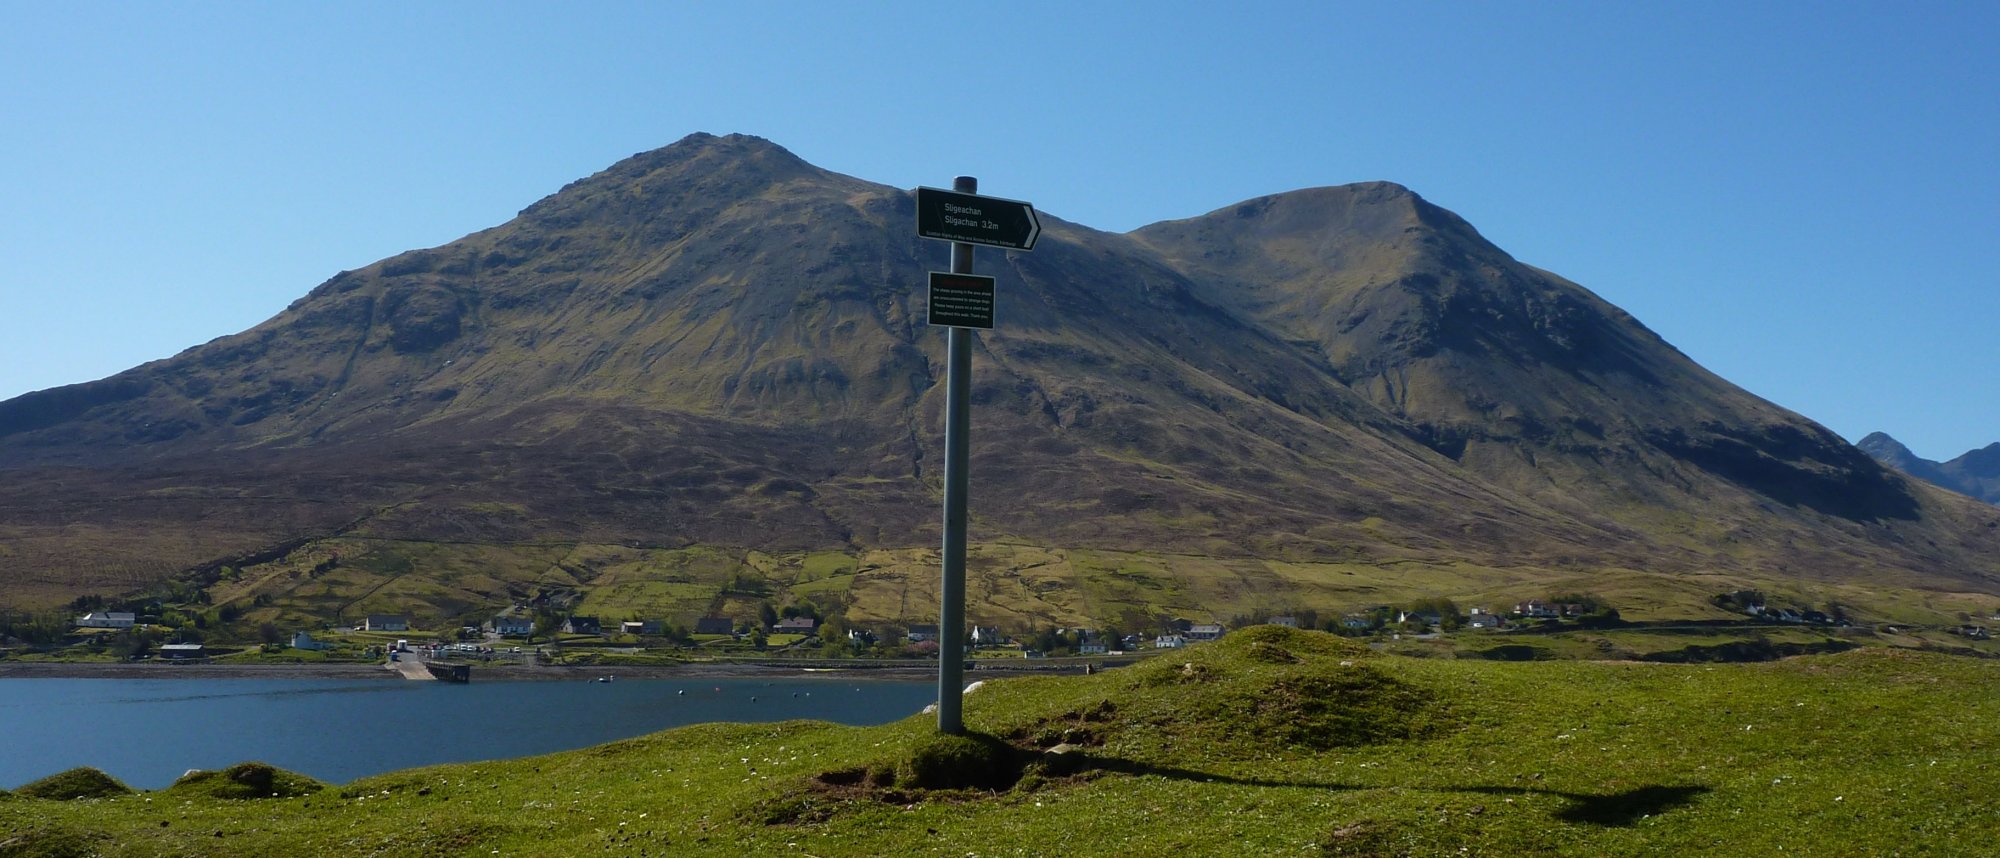 Scotways sign, pointing to Sligachan